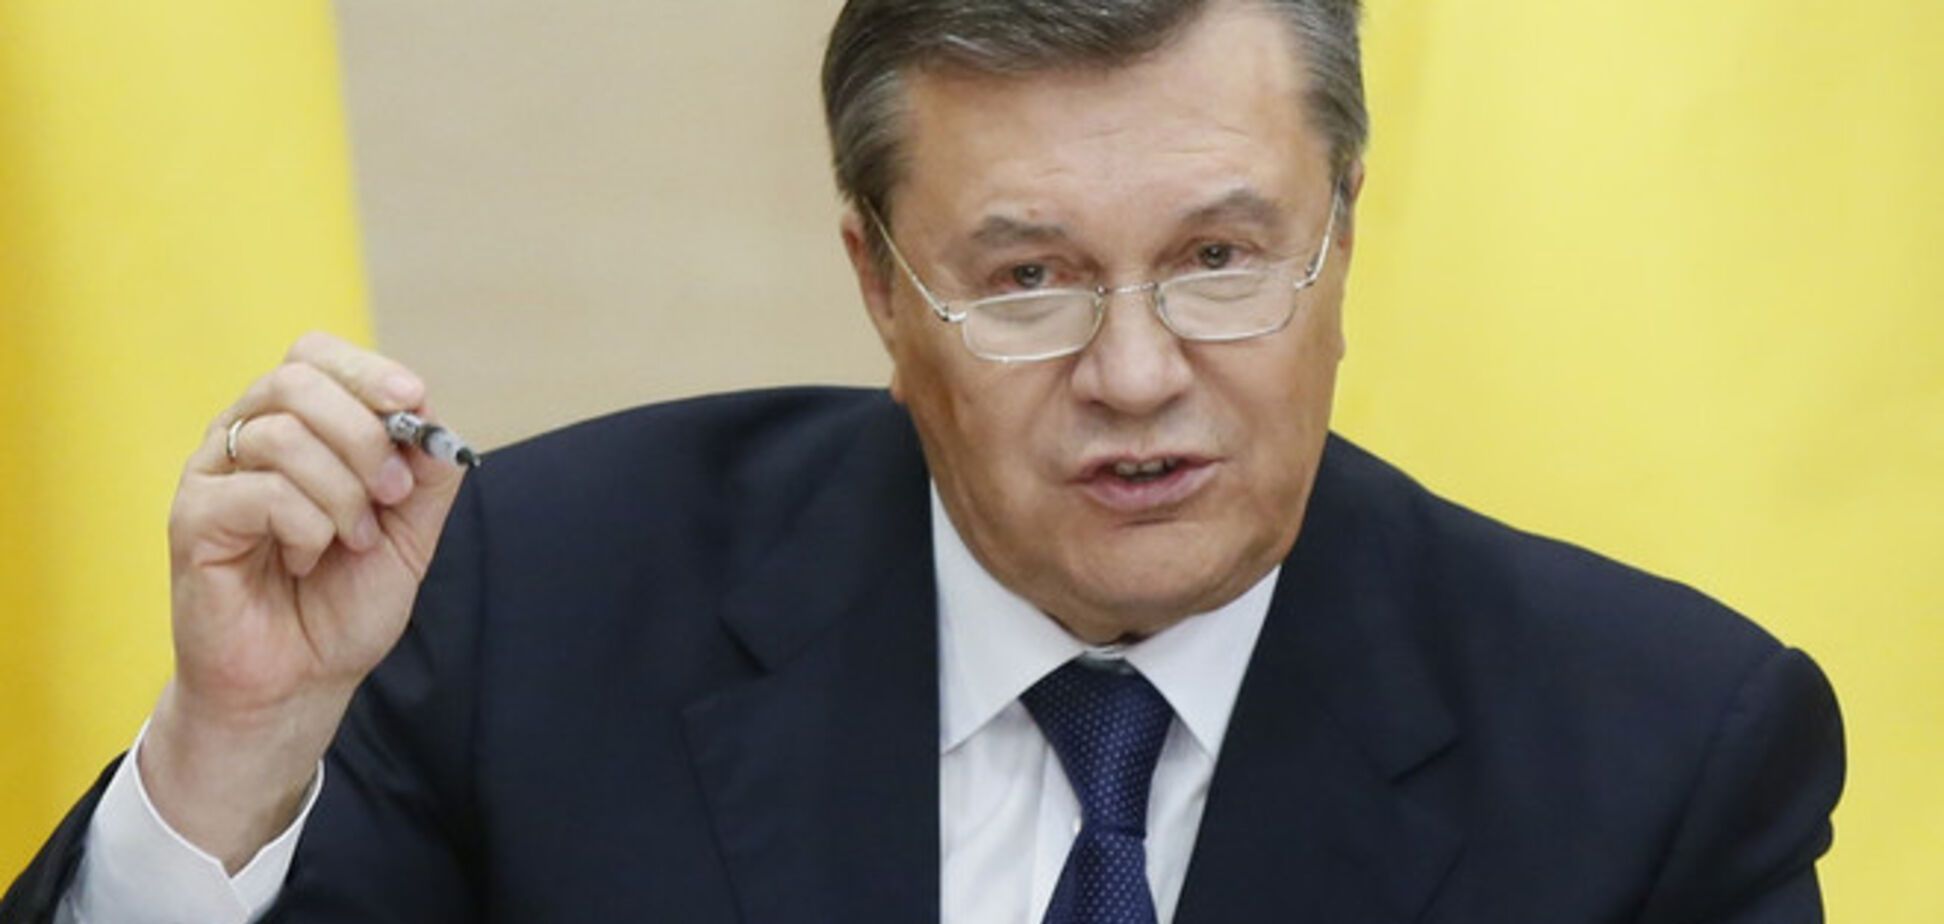 Герман о событиях на востоке: после побега Януковича упала стена